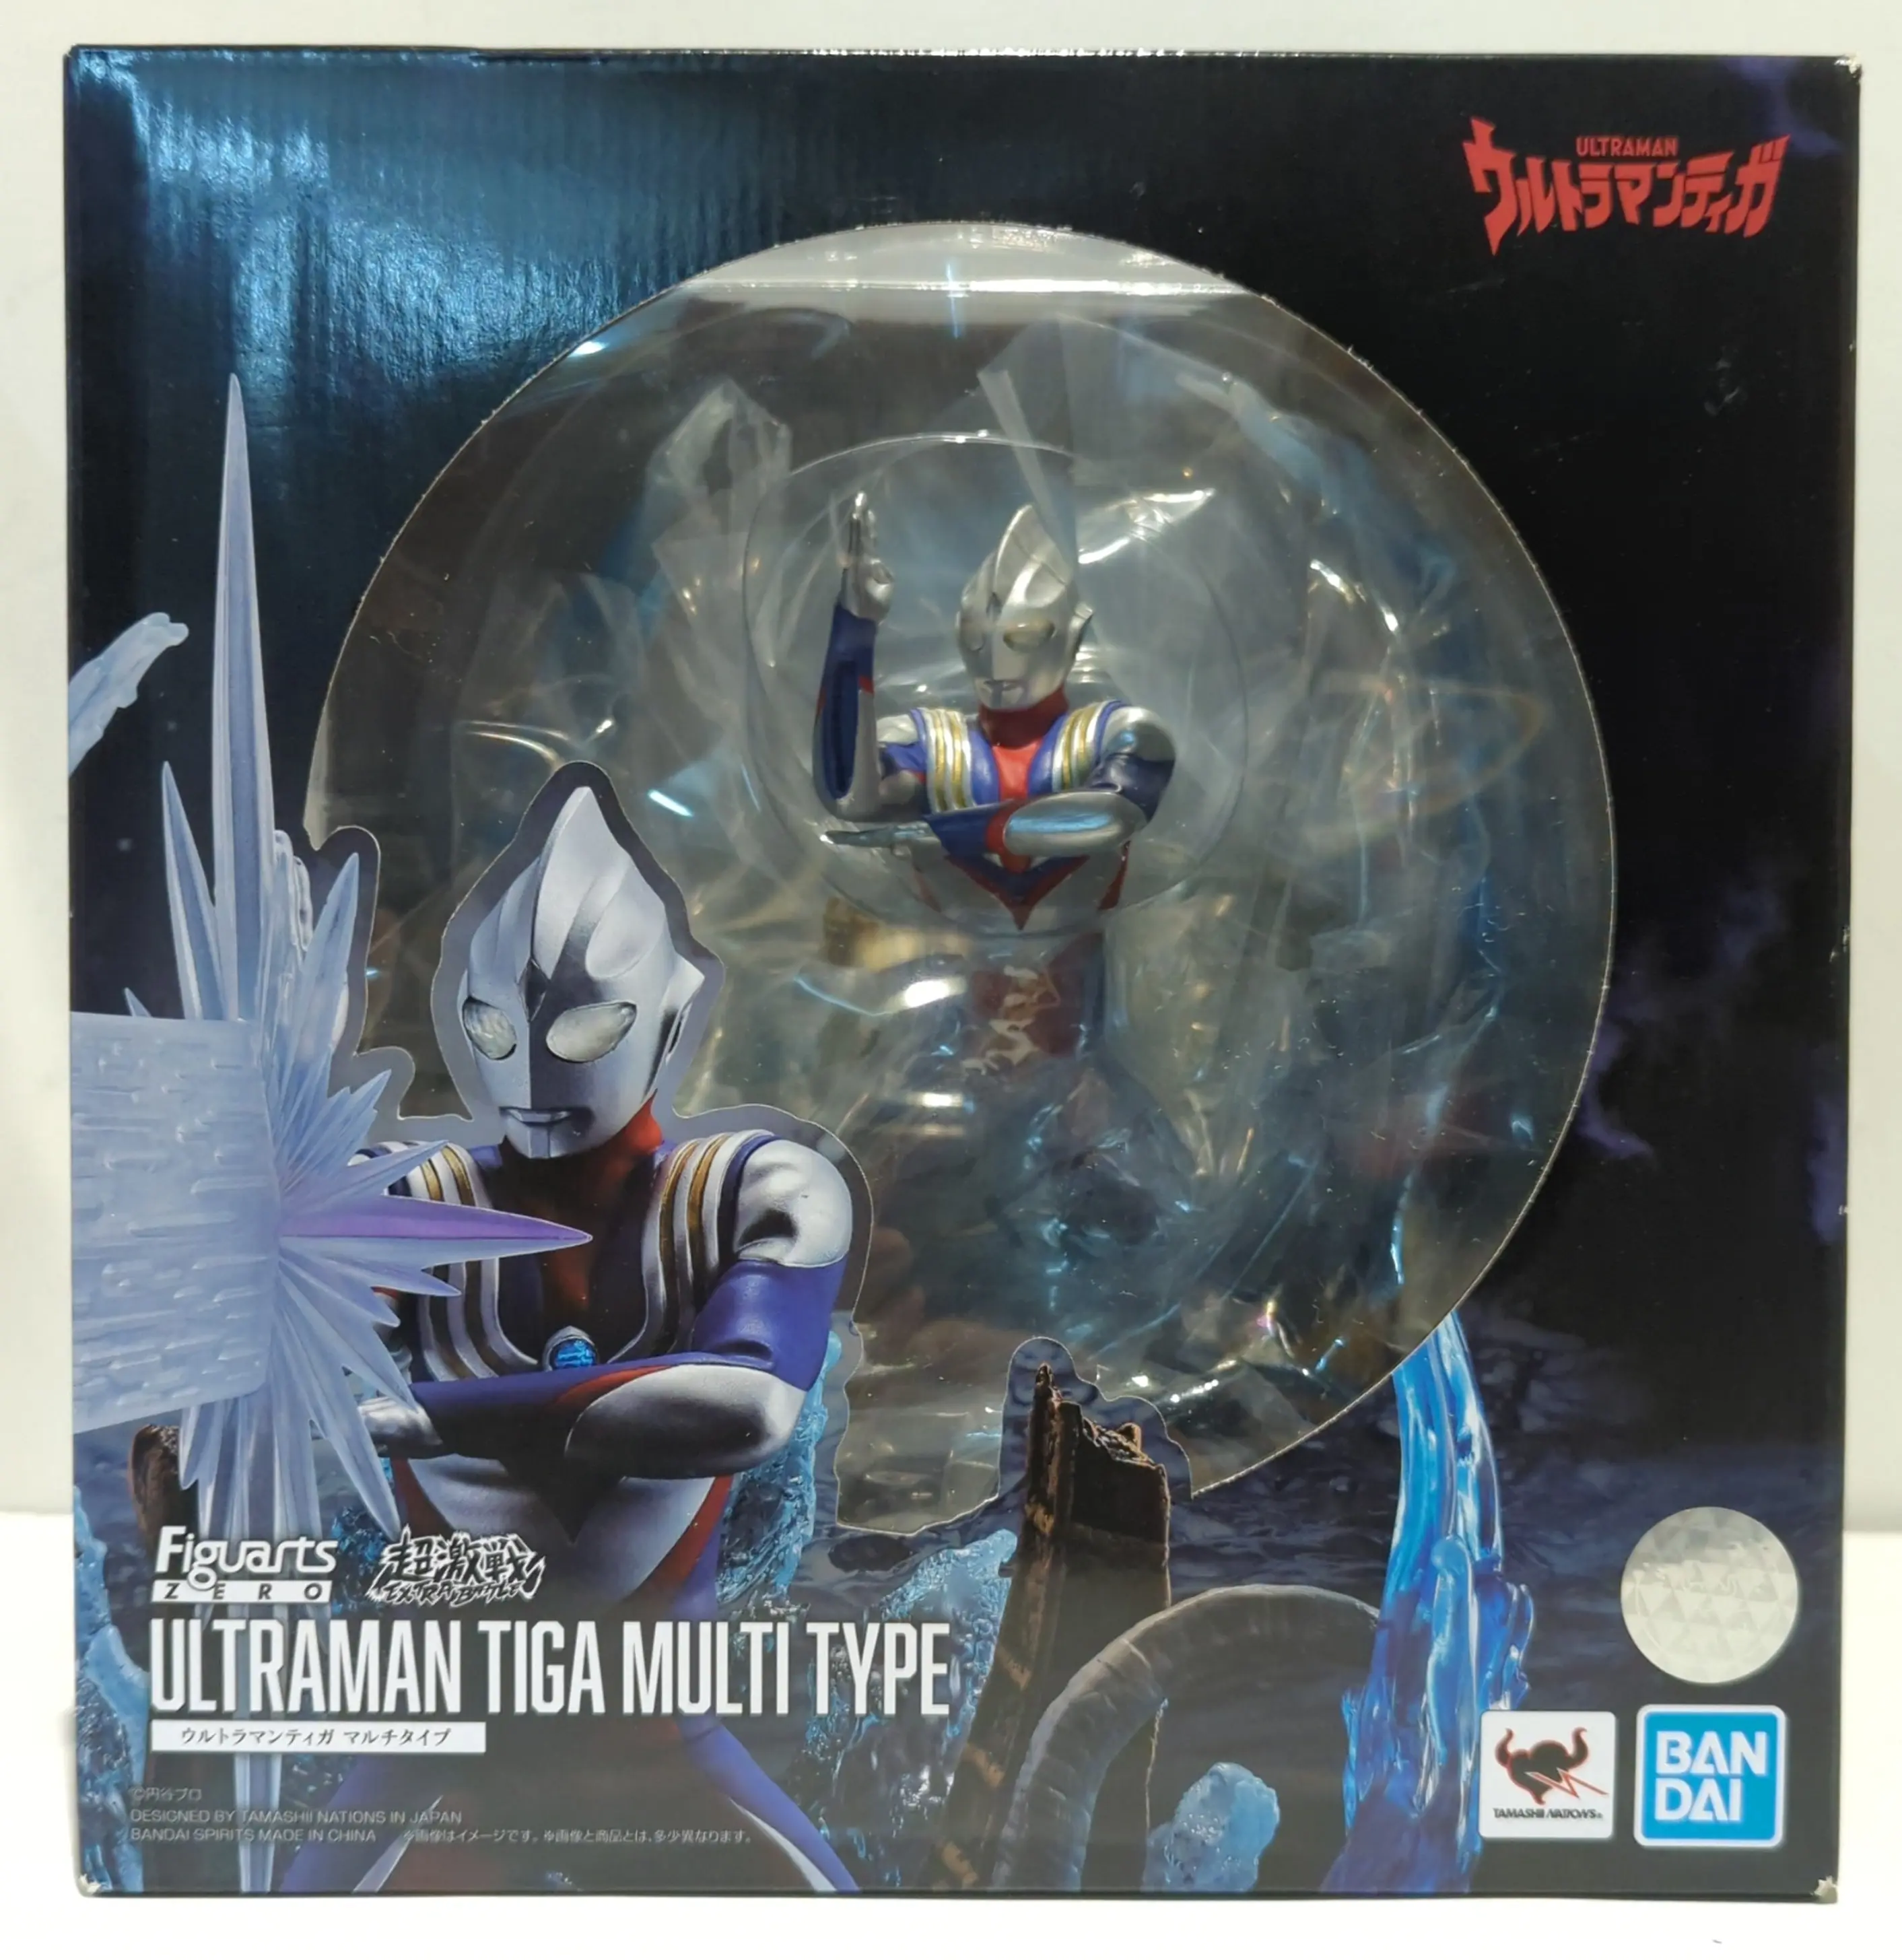 Figuarts Zero - Ultraman Series